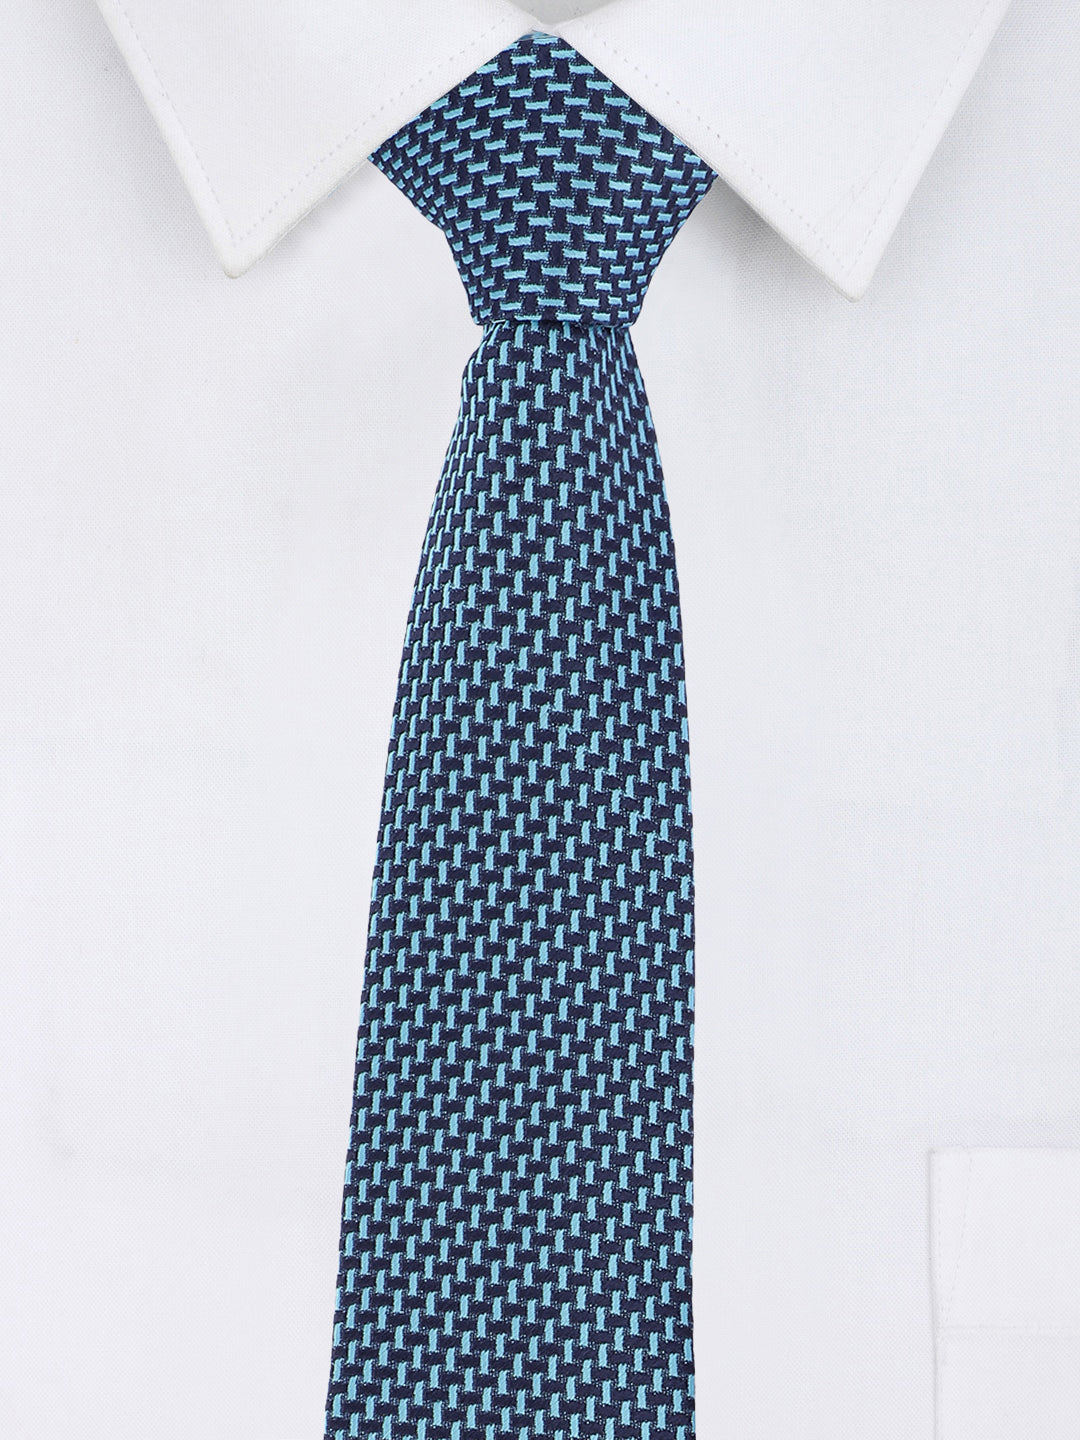 Alvaro Castagnino Microfiber BLUE Colored Necktie for Men